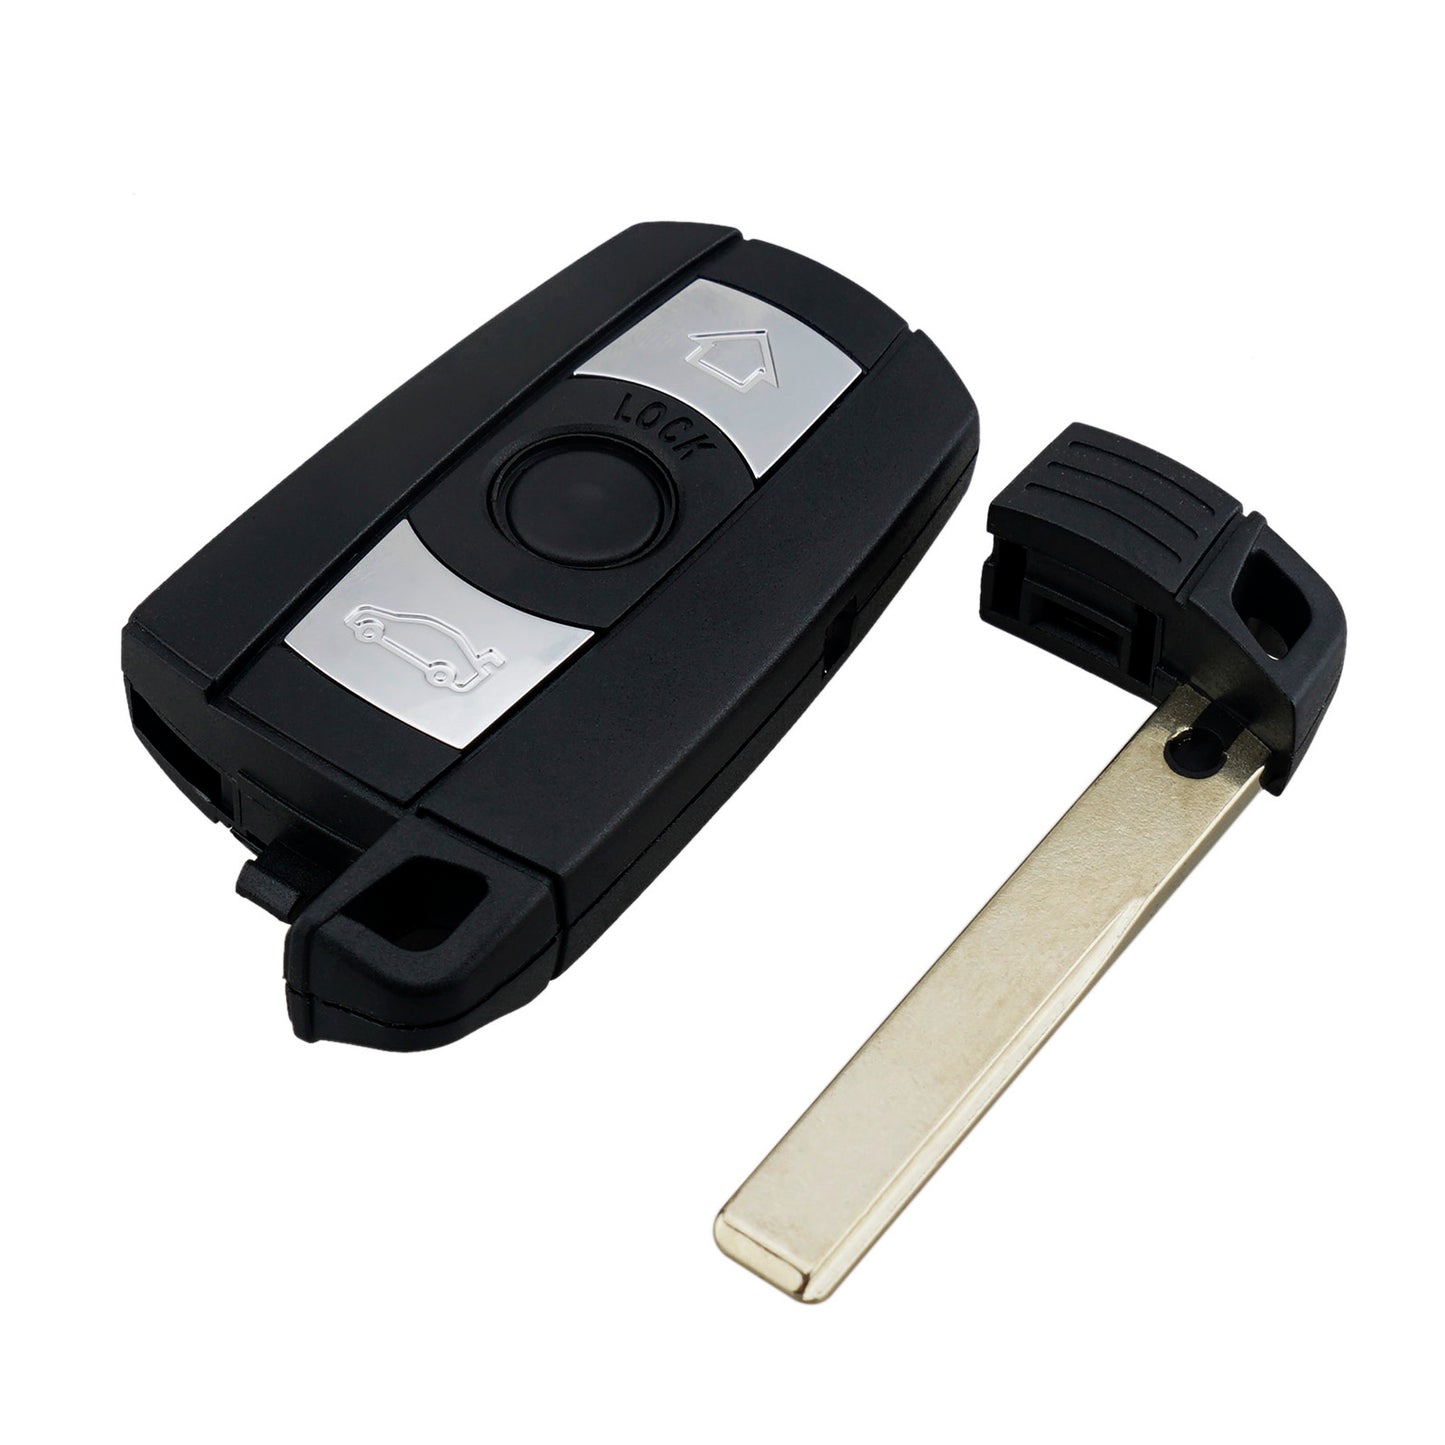 3 Buttons 315MHz Keyless Entry Fob Remote Car Key For BMW X5 5 Series  SKU:J504